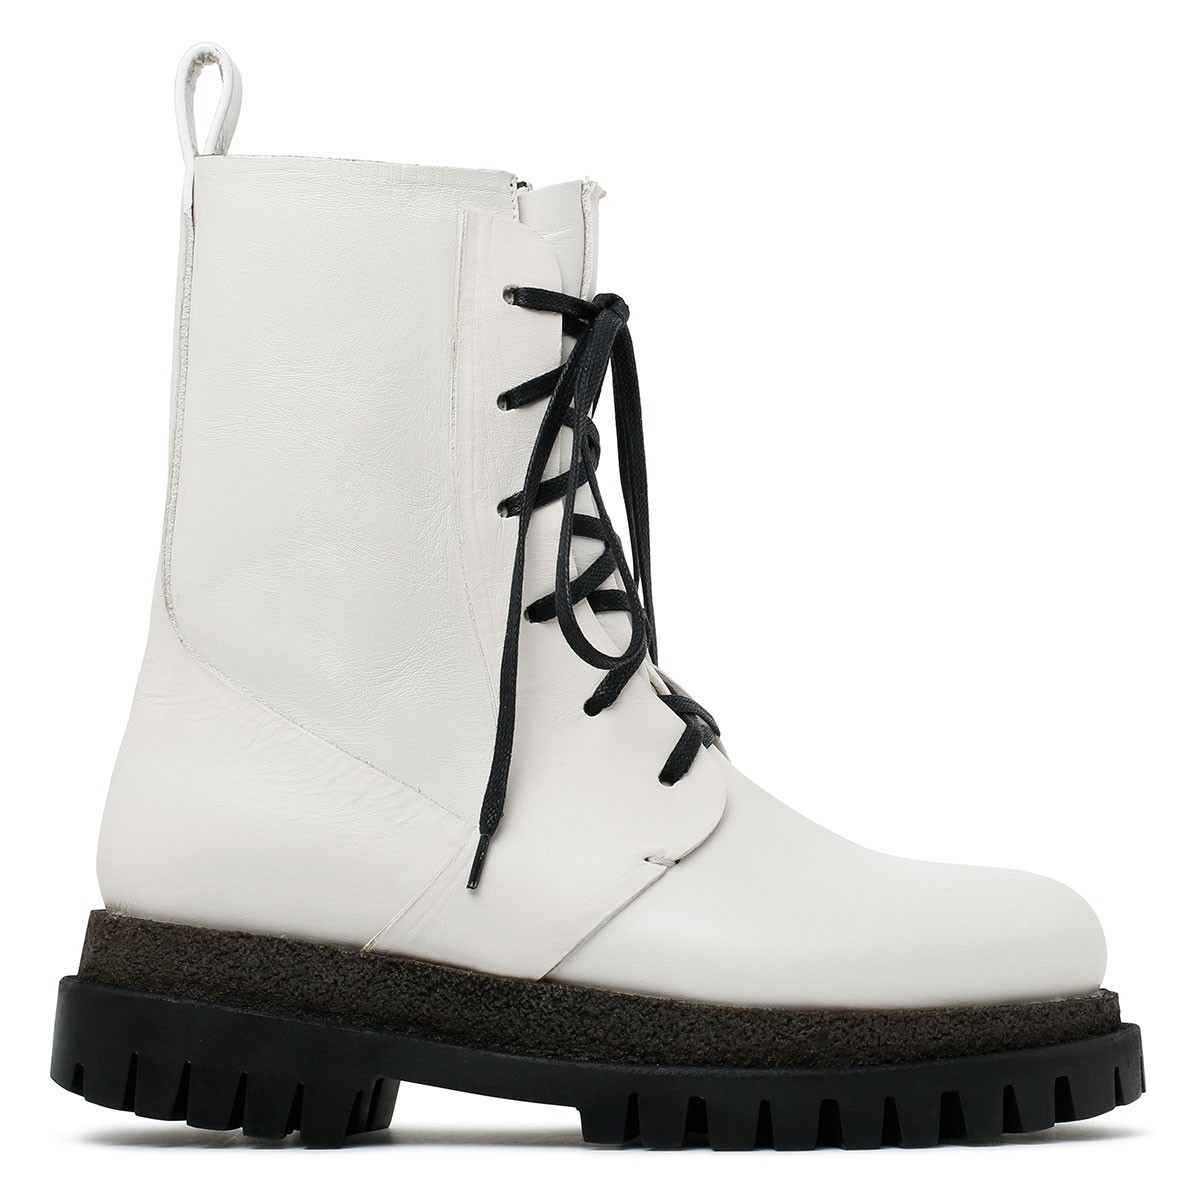 White combat boots